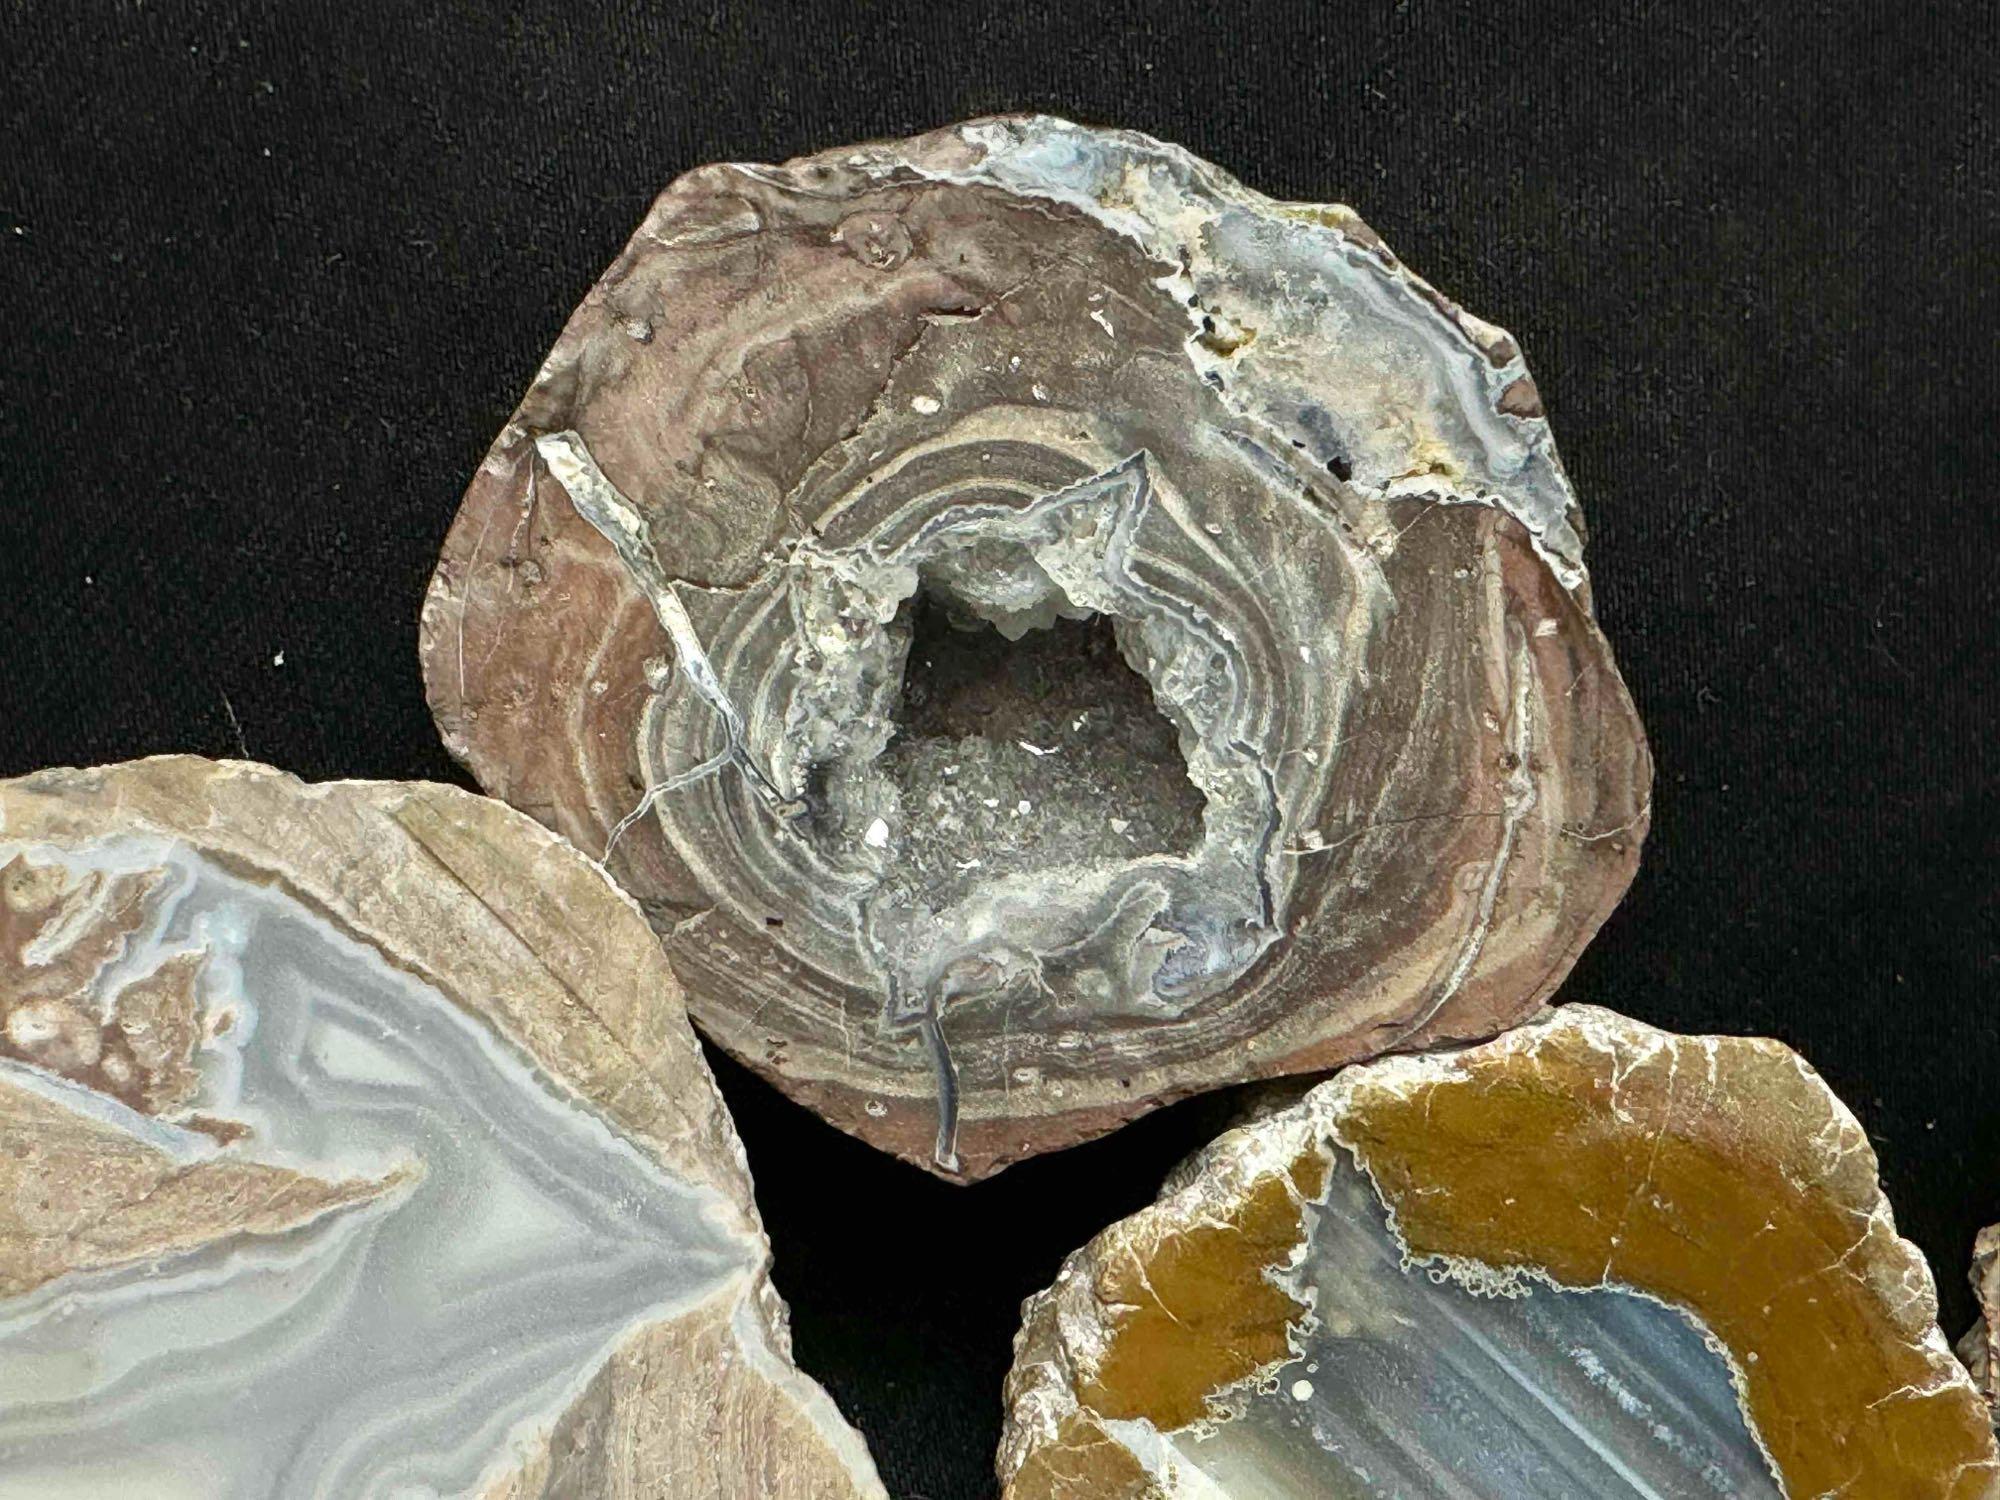 4 Geode Halves Specimens